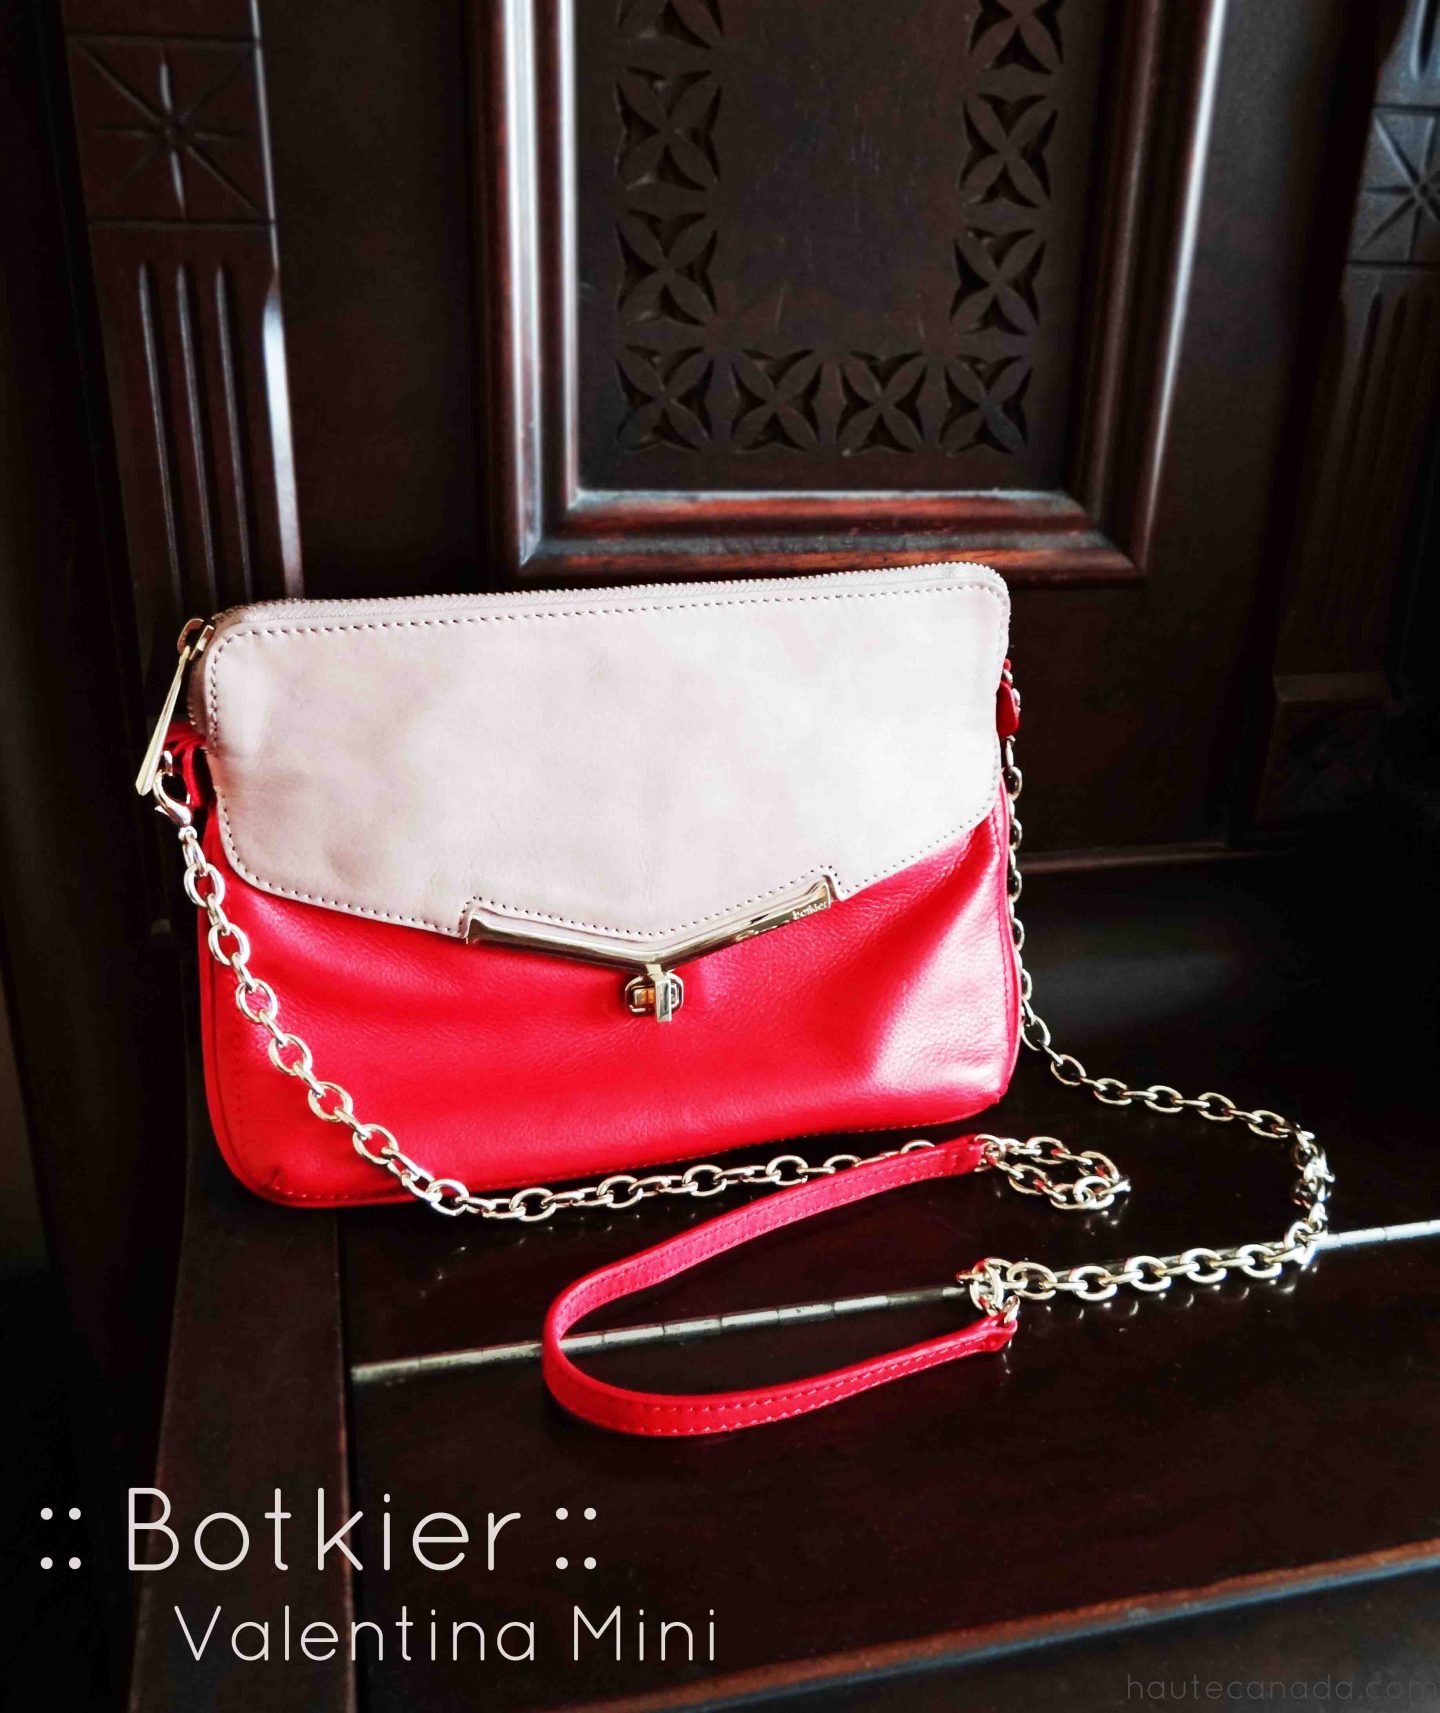 ‘Botkier Valentina Mini’ – my new one-of-a-kind purse!